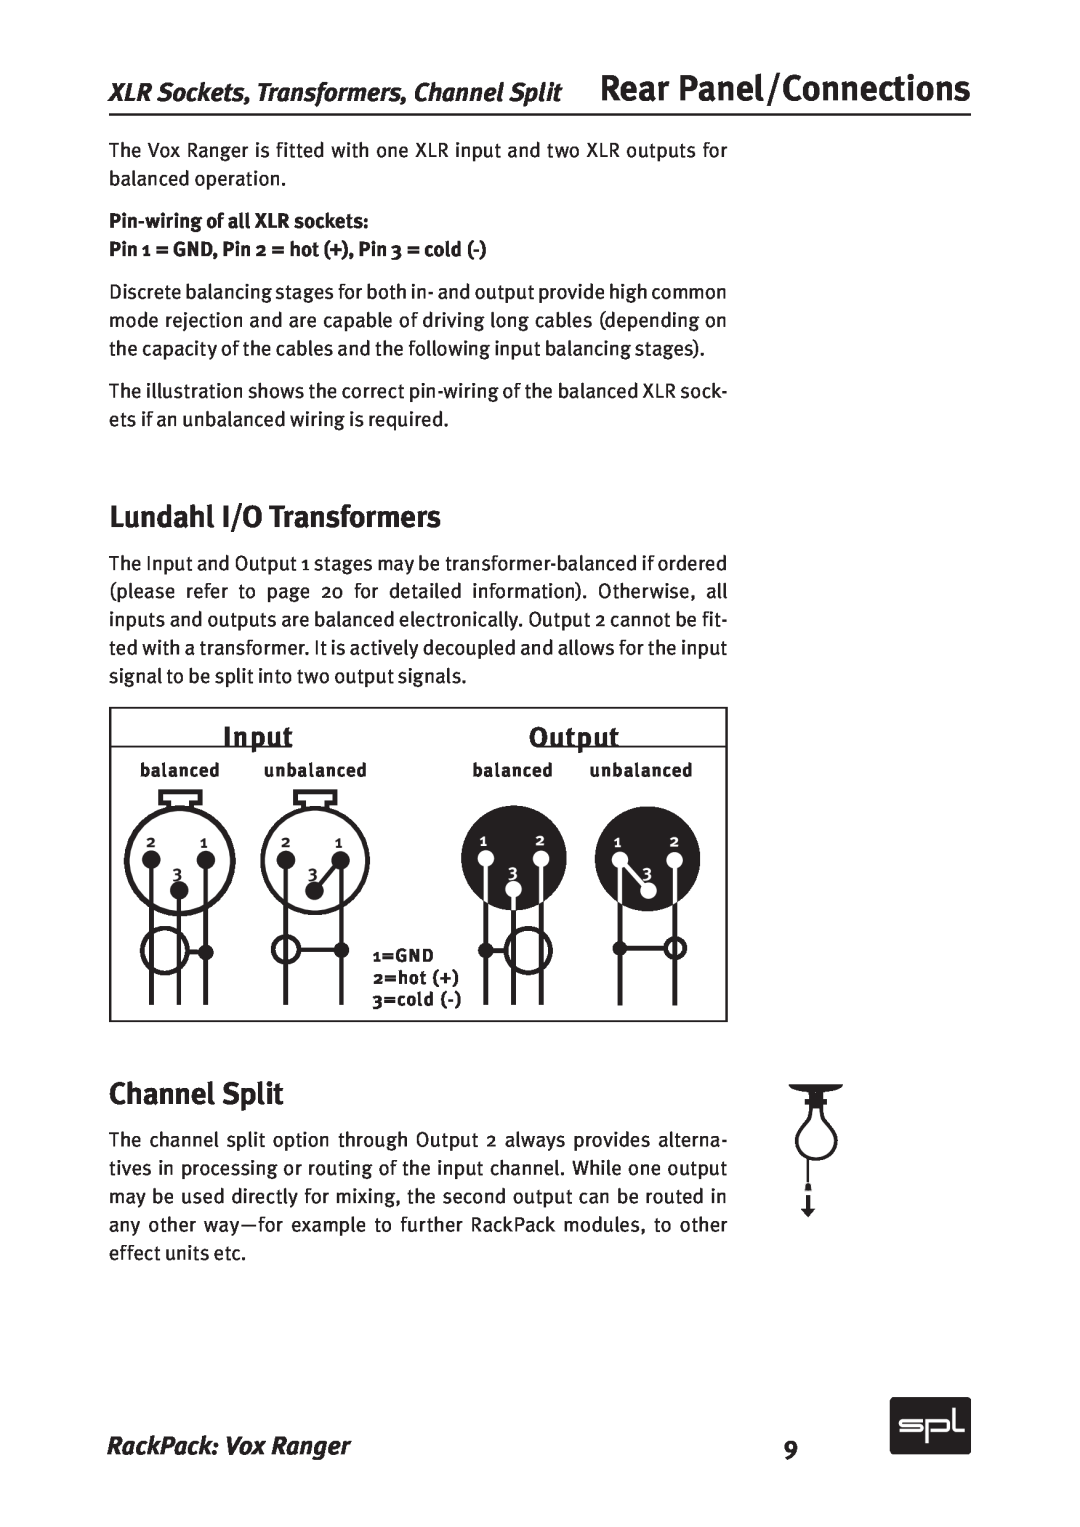 Sound Performance Lab 2718 manual Lundahl I/O Transformers, Channel Split, OQVU0VUQVU, Pin-wiringof all XLR sockets 